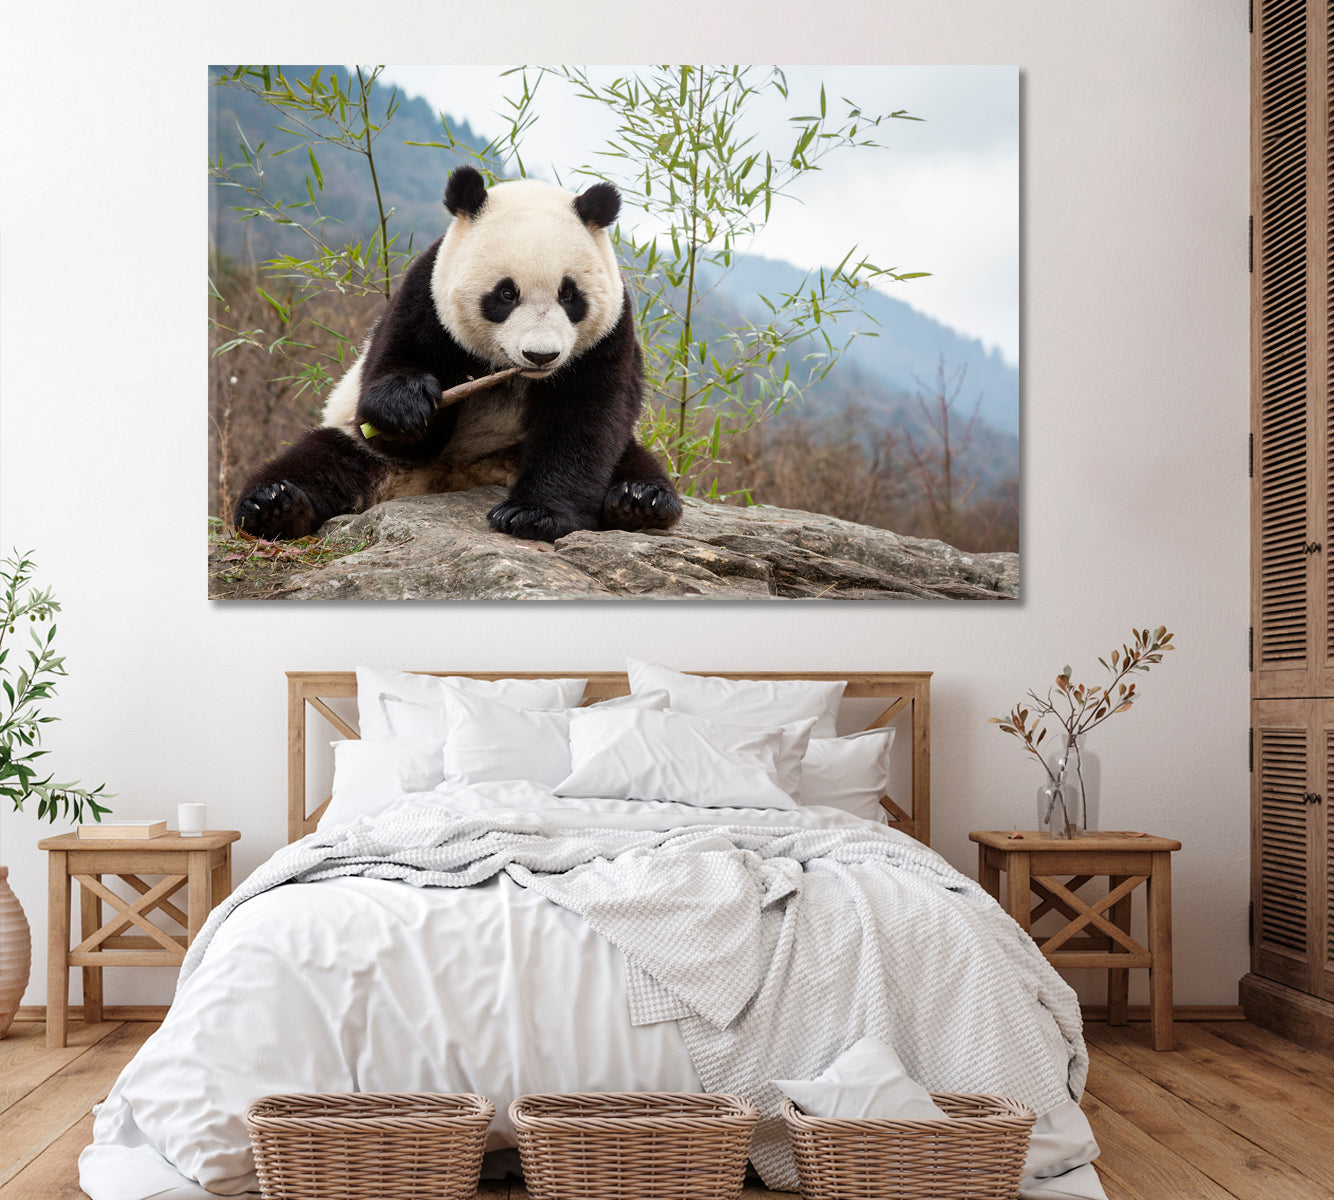 Panda Eating Bamboo Canvas Print ArtLexy 1 Panel 24"x16" inches 